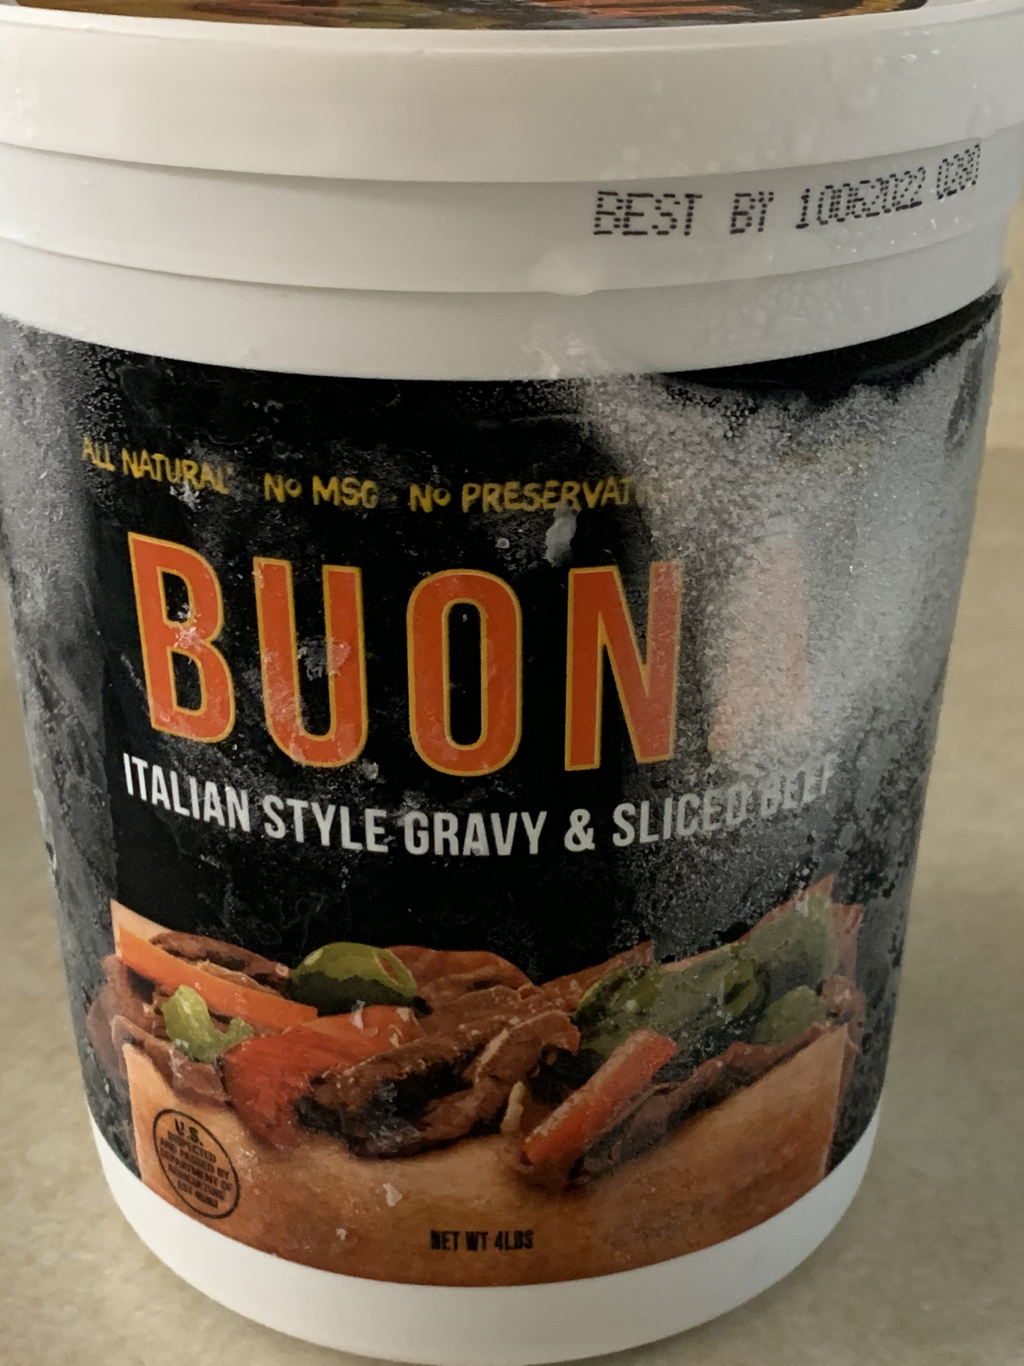 Aldi Review - Buona Italian Style Gravy & Sliced Beef Review